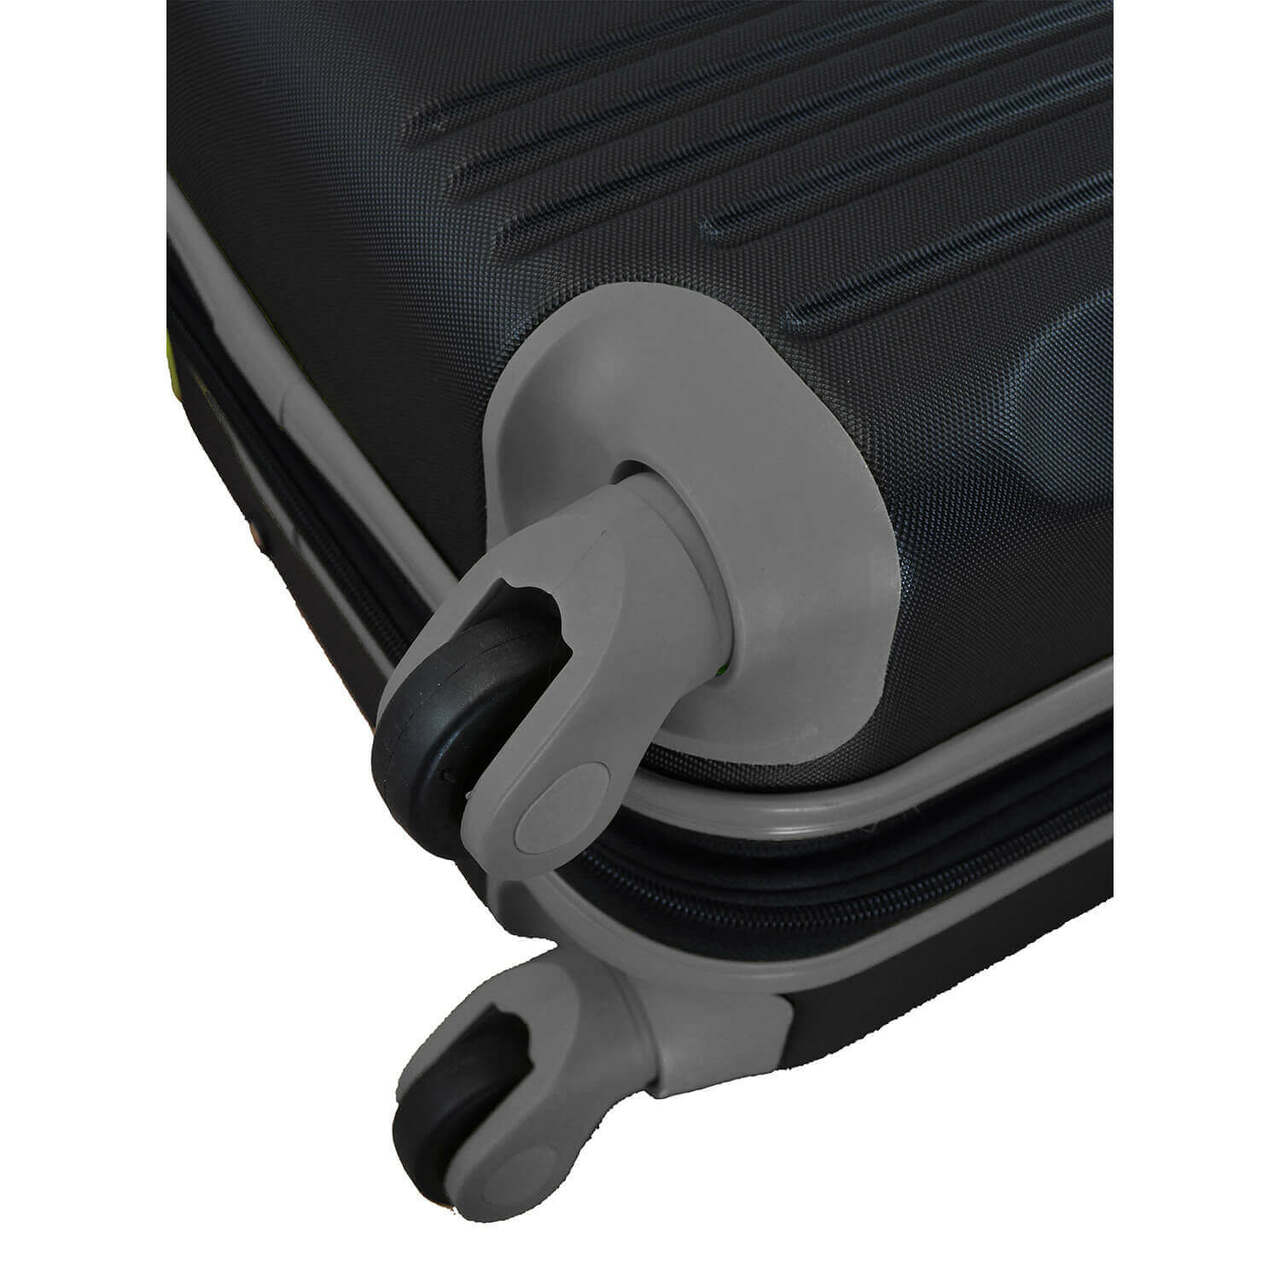 Mavericks Carry On Spinner Luggage | Dallas Mavericks Hardcase Two-Tone Luggage Carry-on Spinner in Gray